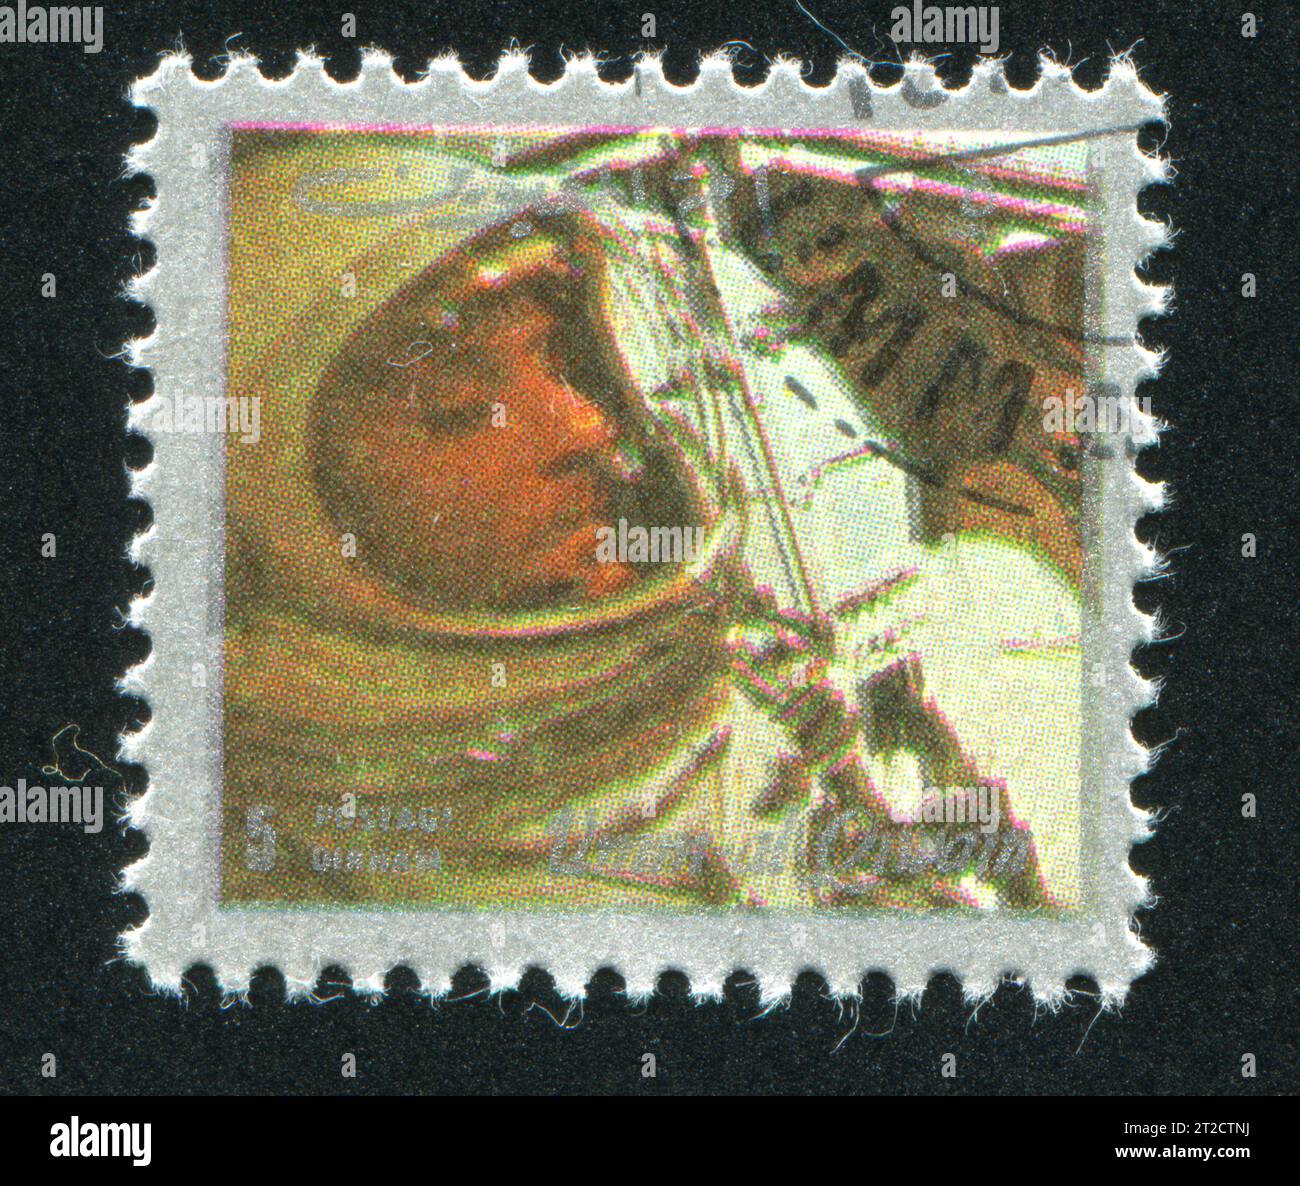 UMM AL-QUWAIN - CIRCA 1972: Timbro stampato da Umm al-Quwain, mostra Wally Schirra, circa 1972 Foto Stock